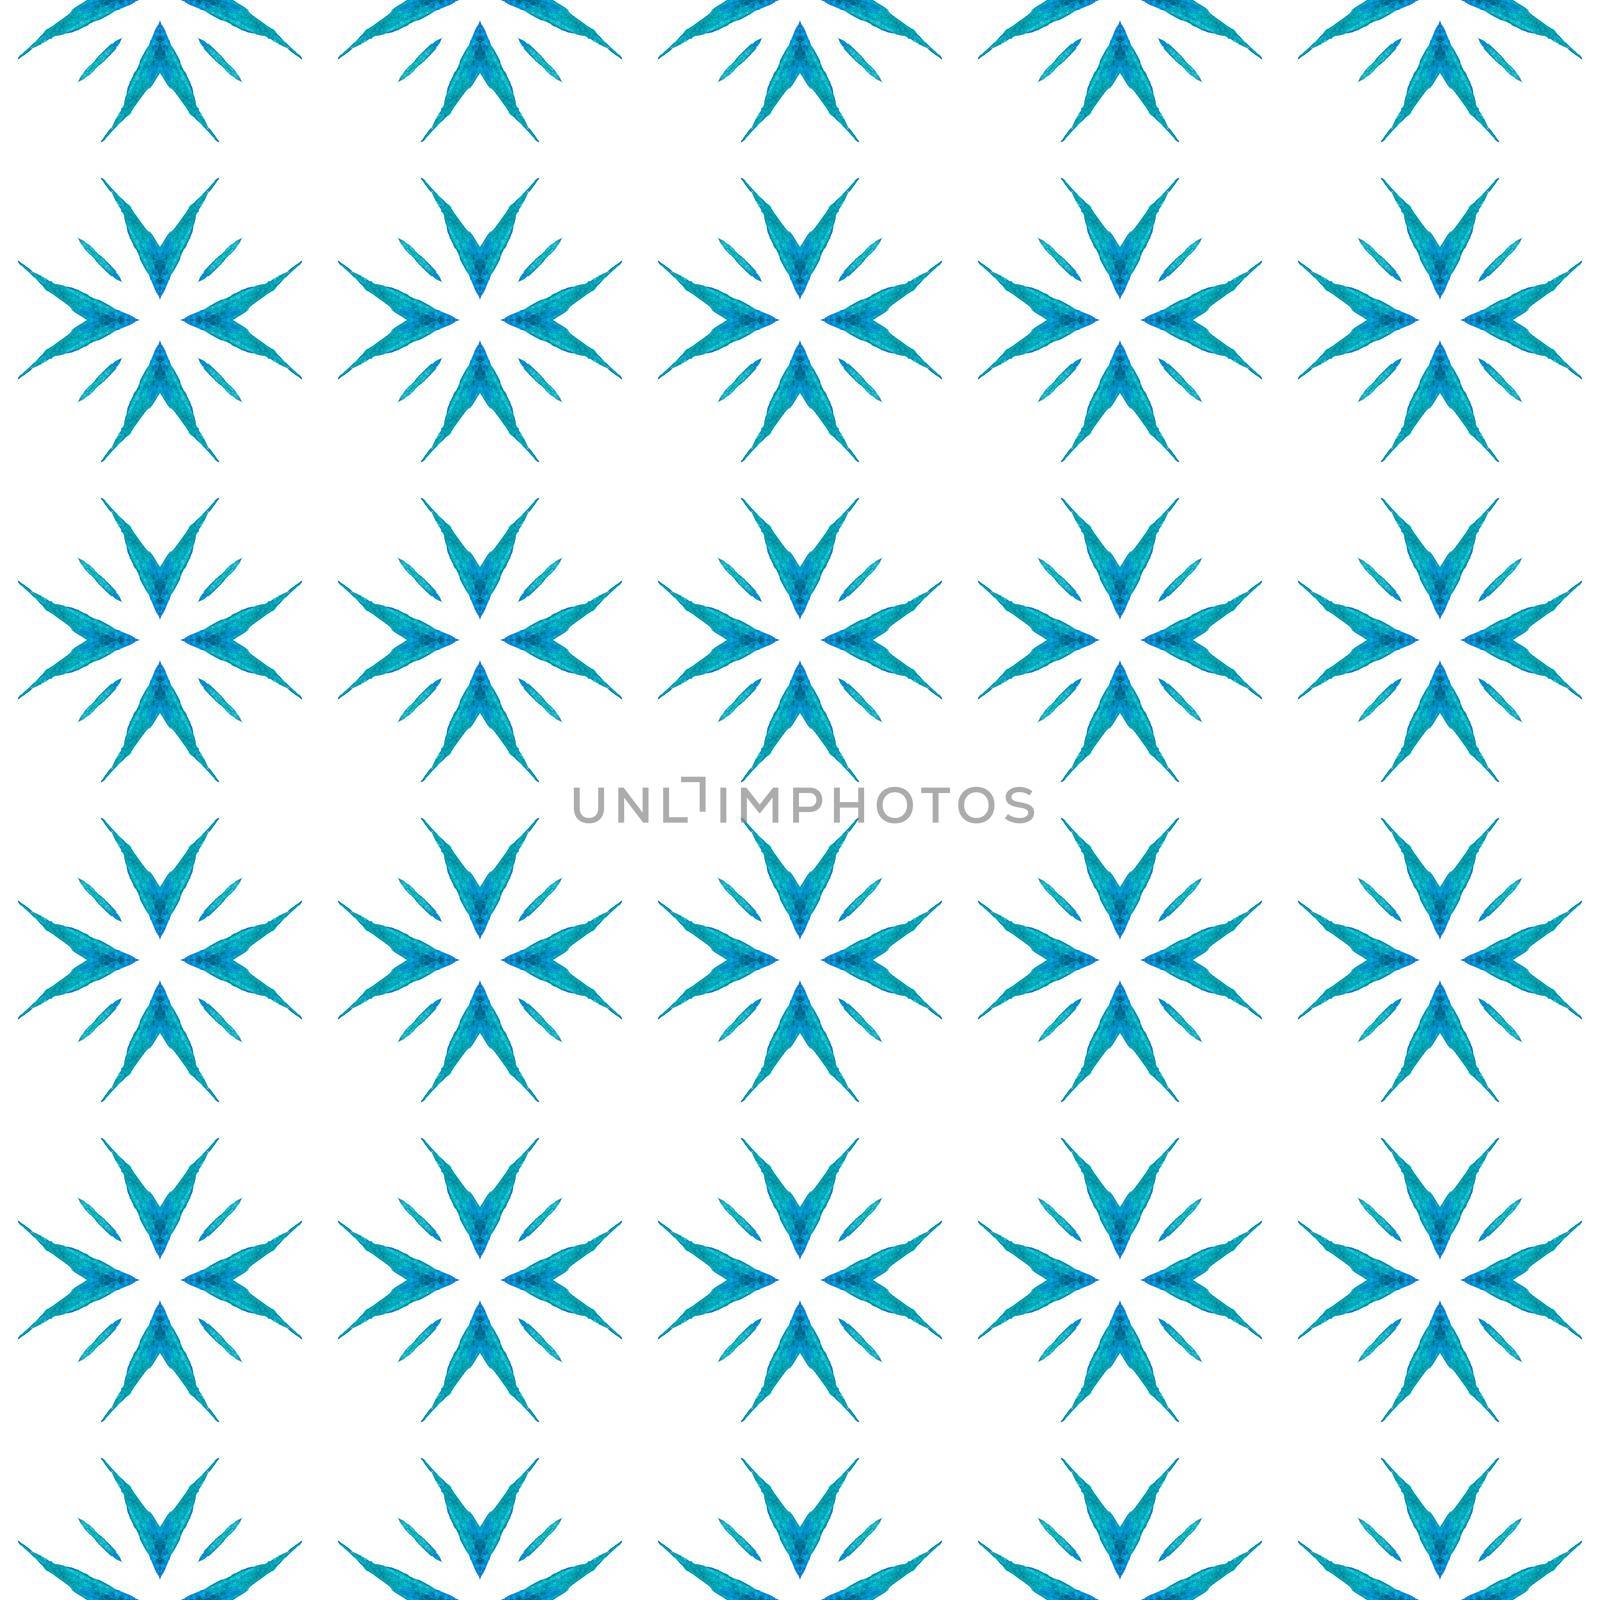 Chevron watercolor pattern. Blue magnetic boho chic summer design. Textile ready astonishing print, swimwear fabric, wallpaper, wrapping. Green geometric chevron watercolor border.